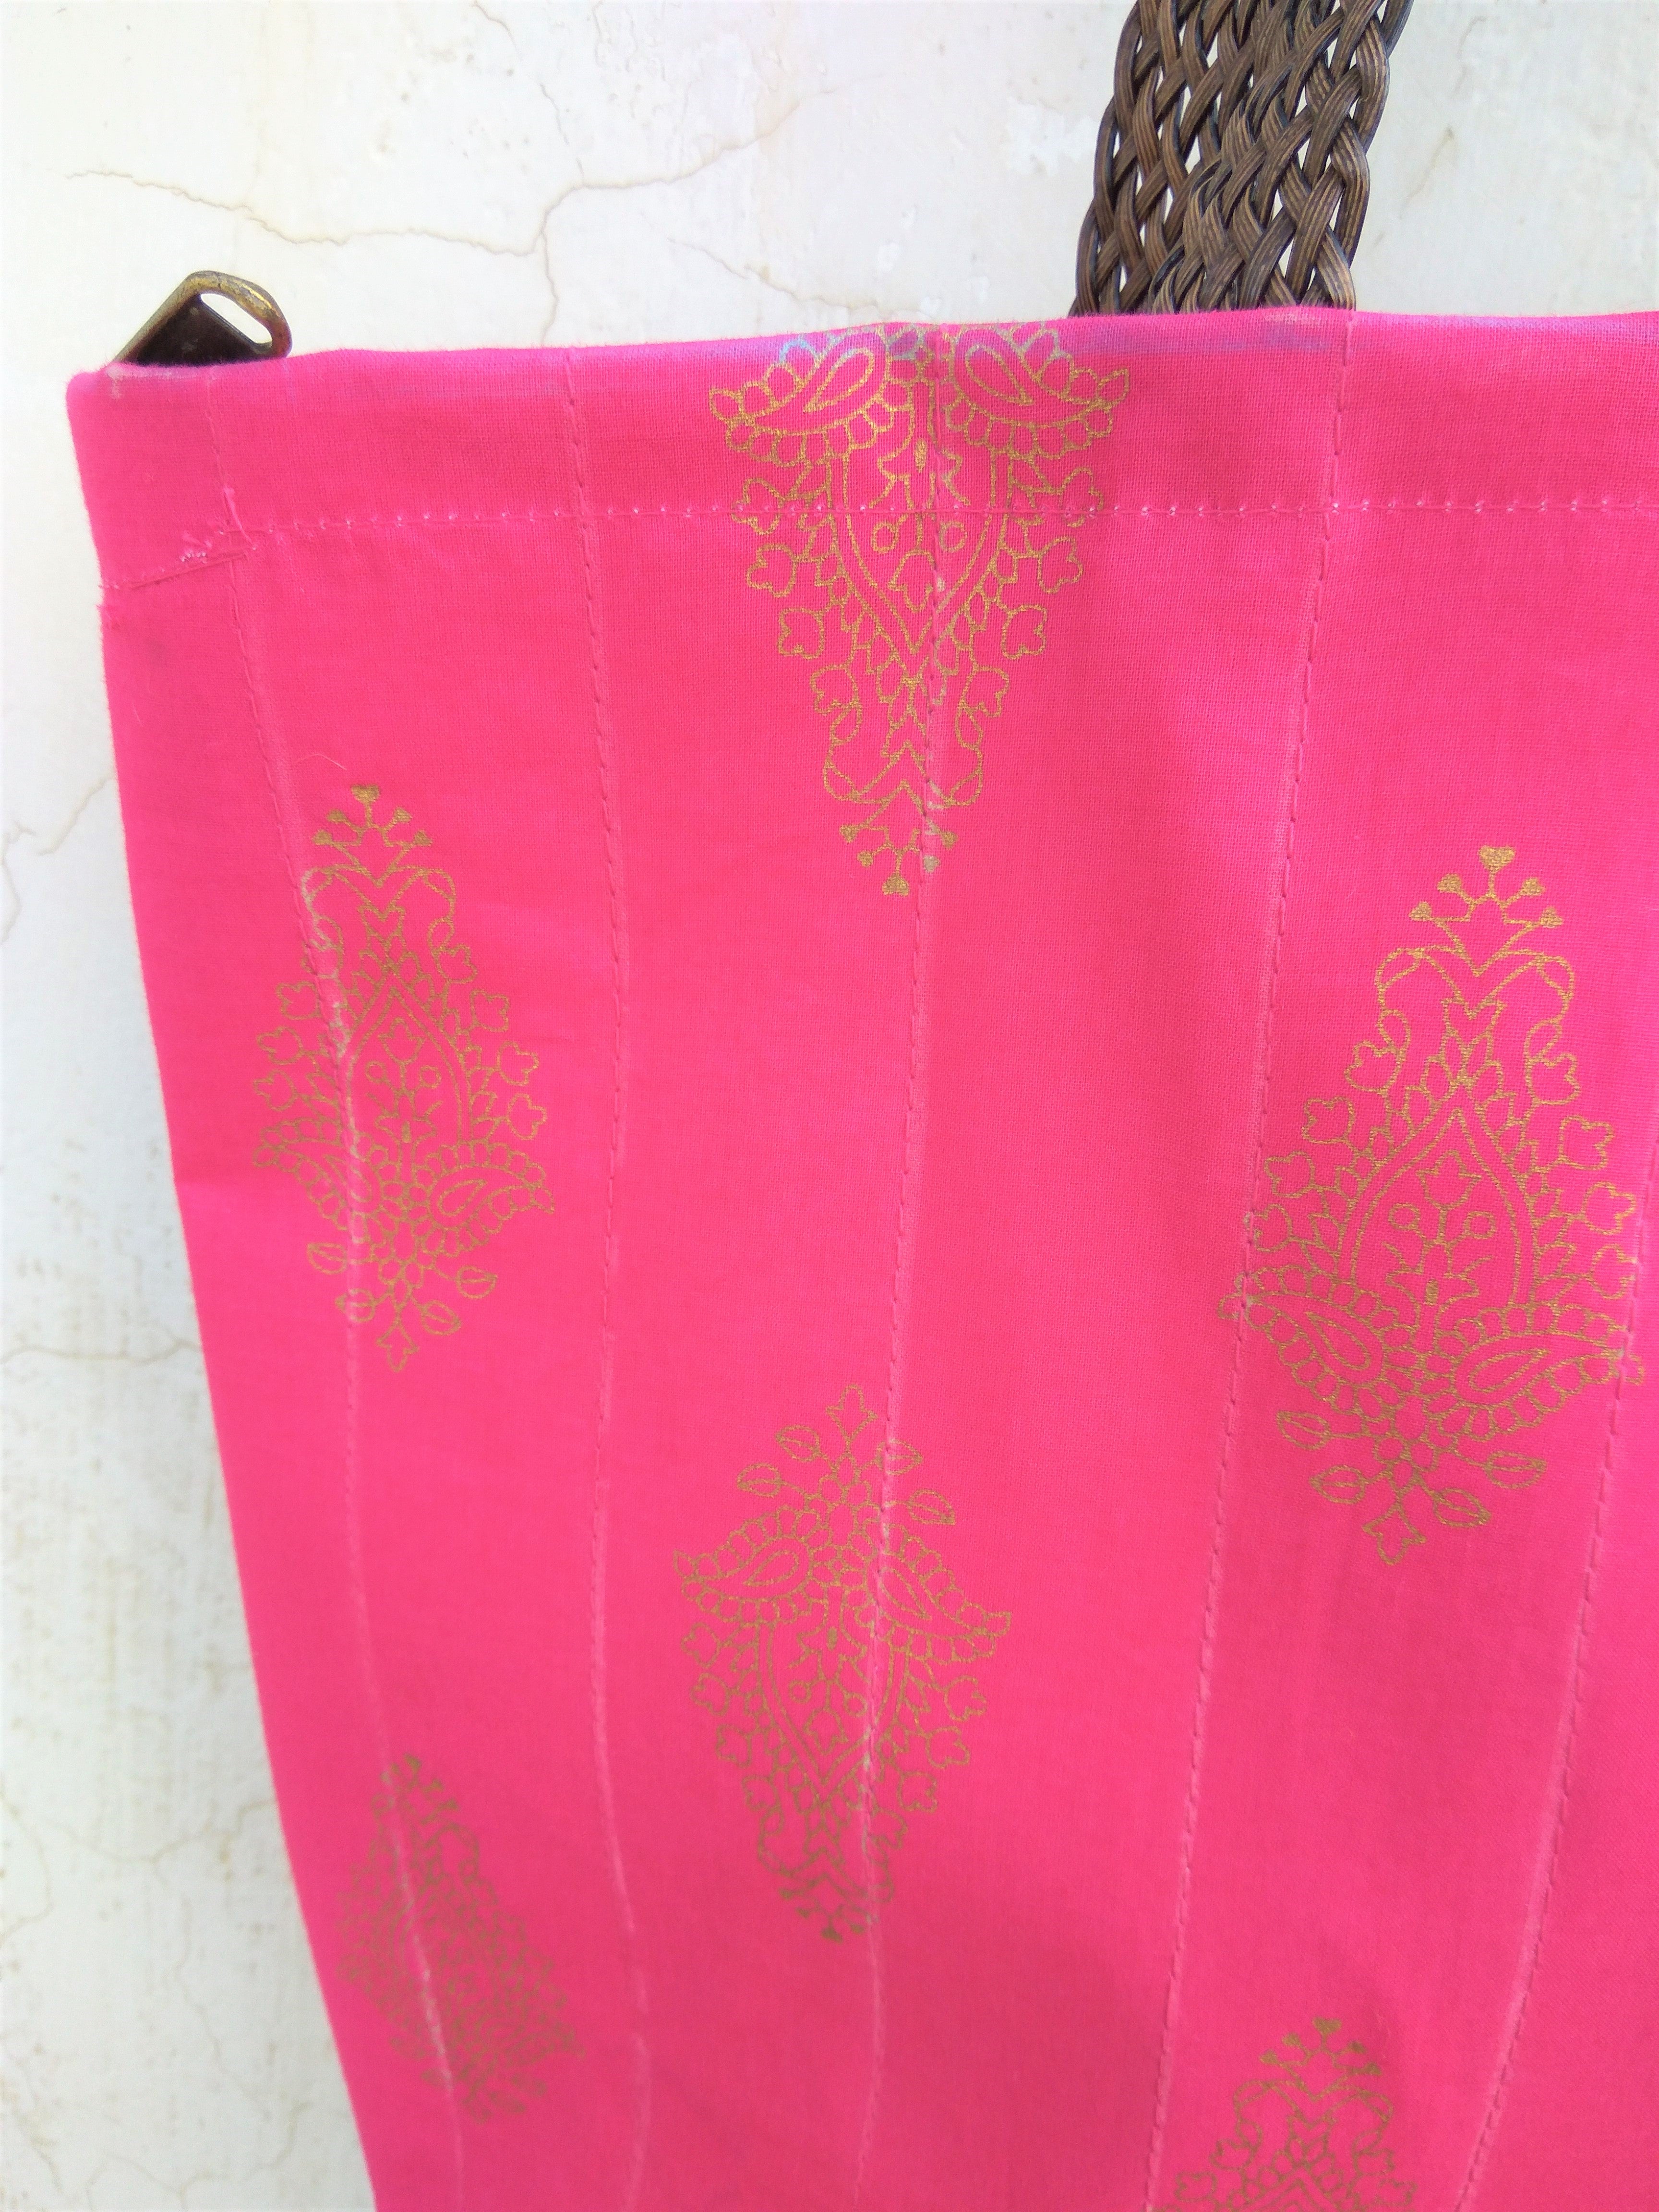 Handmade waterproof Colorful Fabric Indian unique tote handbag travelbag laptop bag traveltote pink pinkgold golden block print pinkbag printed summer colors pop of color ethnic